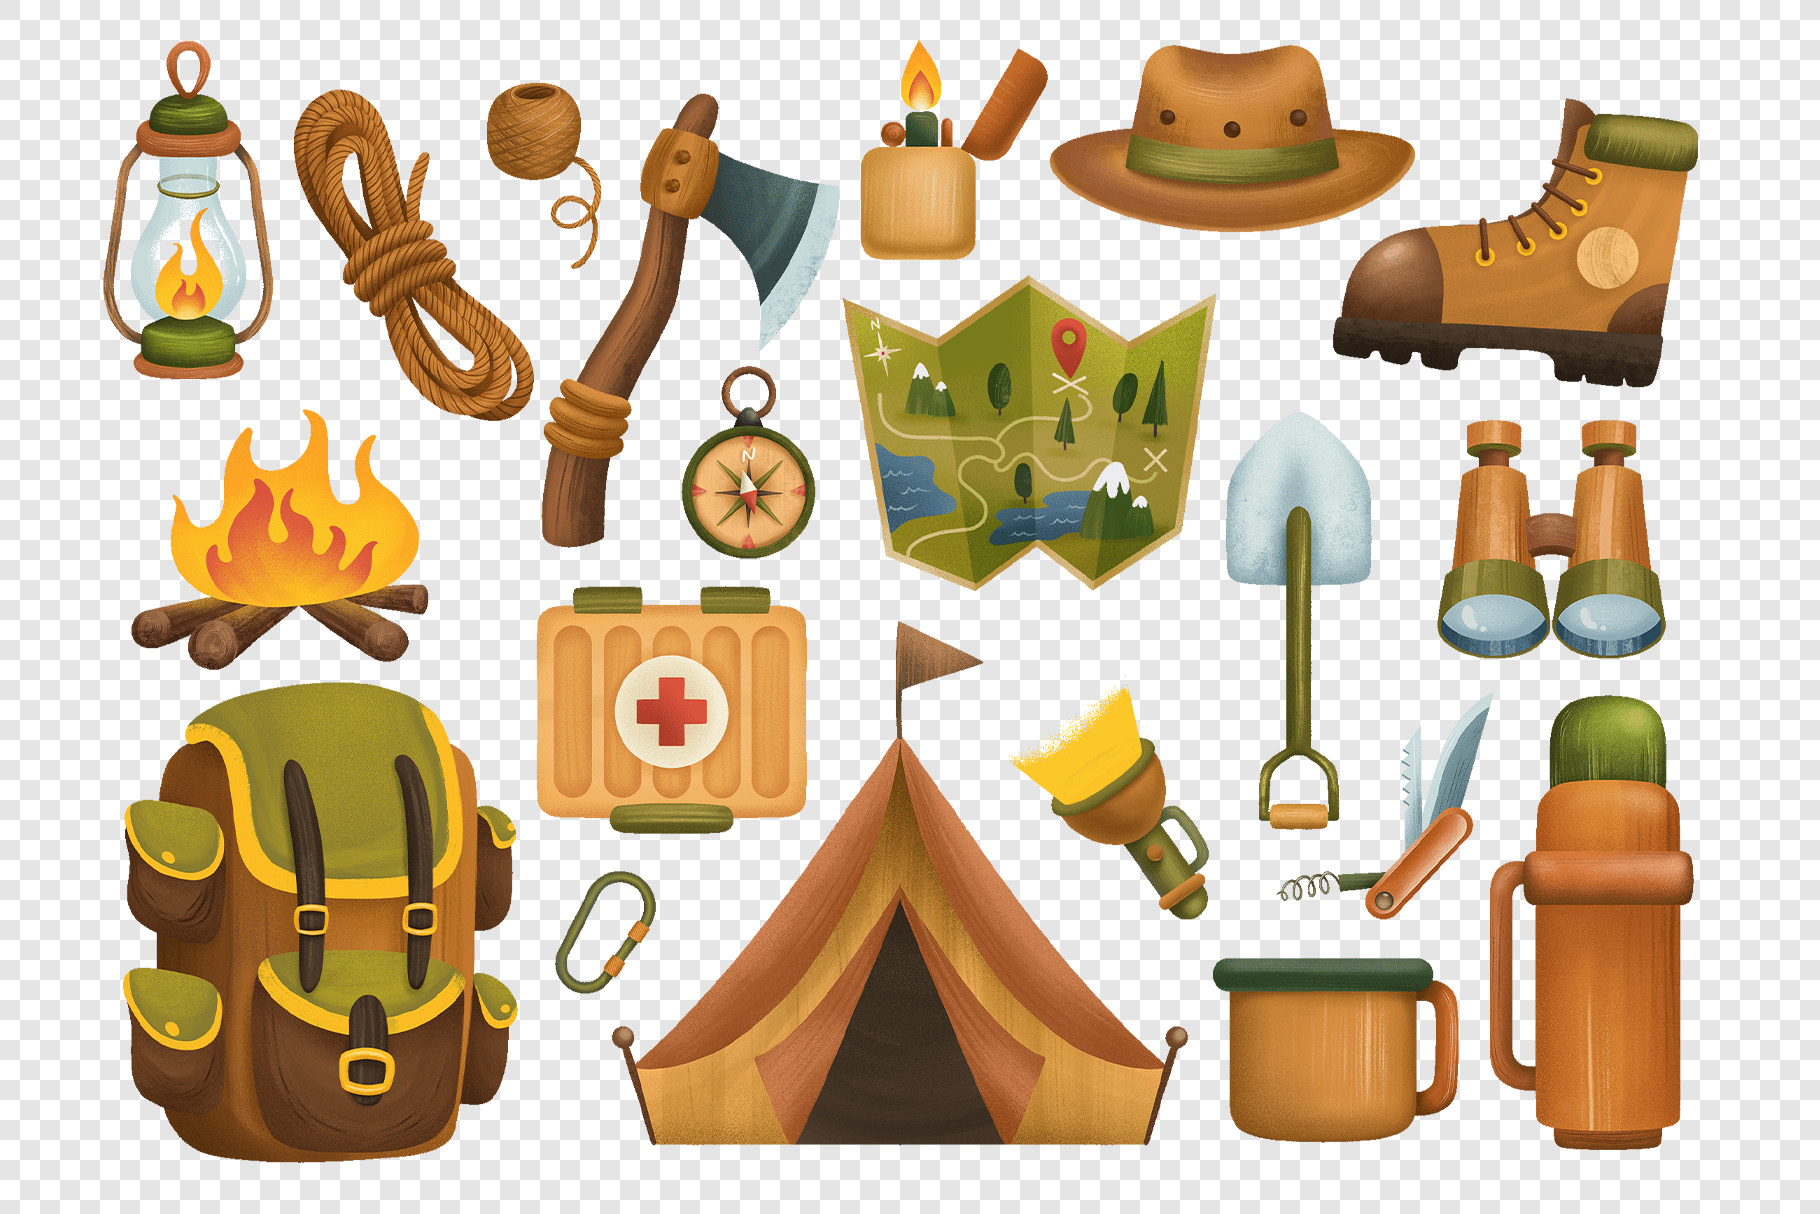 Outdoor Adventure & Survival Illustration Set (PSD, PNG Format)